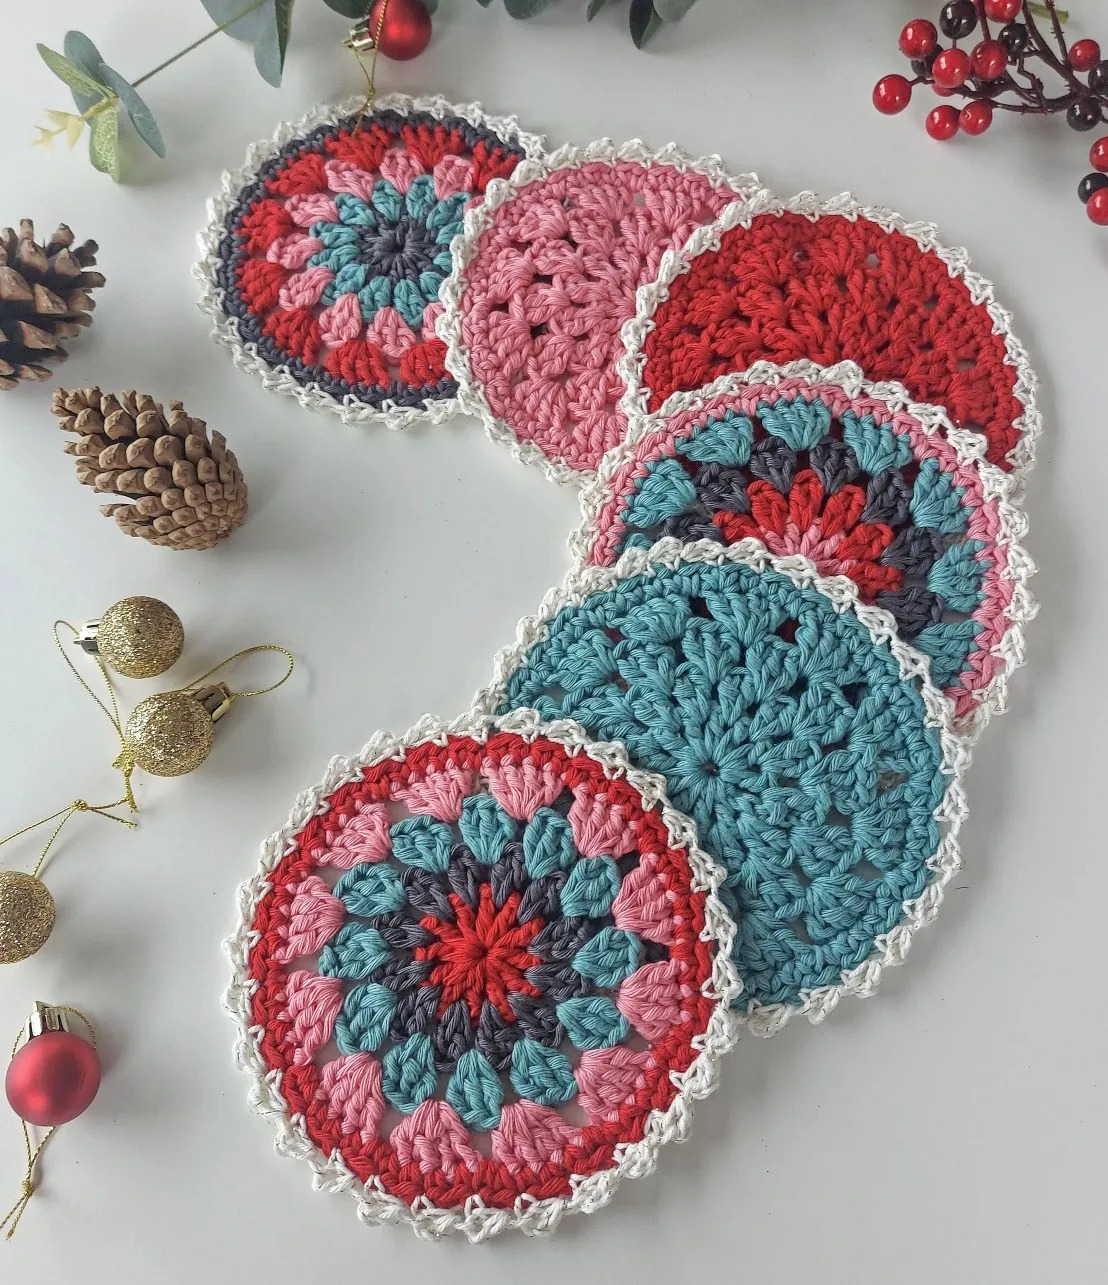 35+ Stunning Crochet Coaster Free Patterns You Can Make! - Little World ...